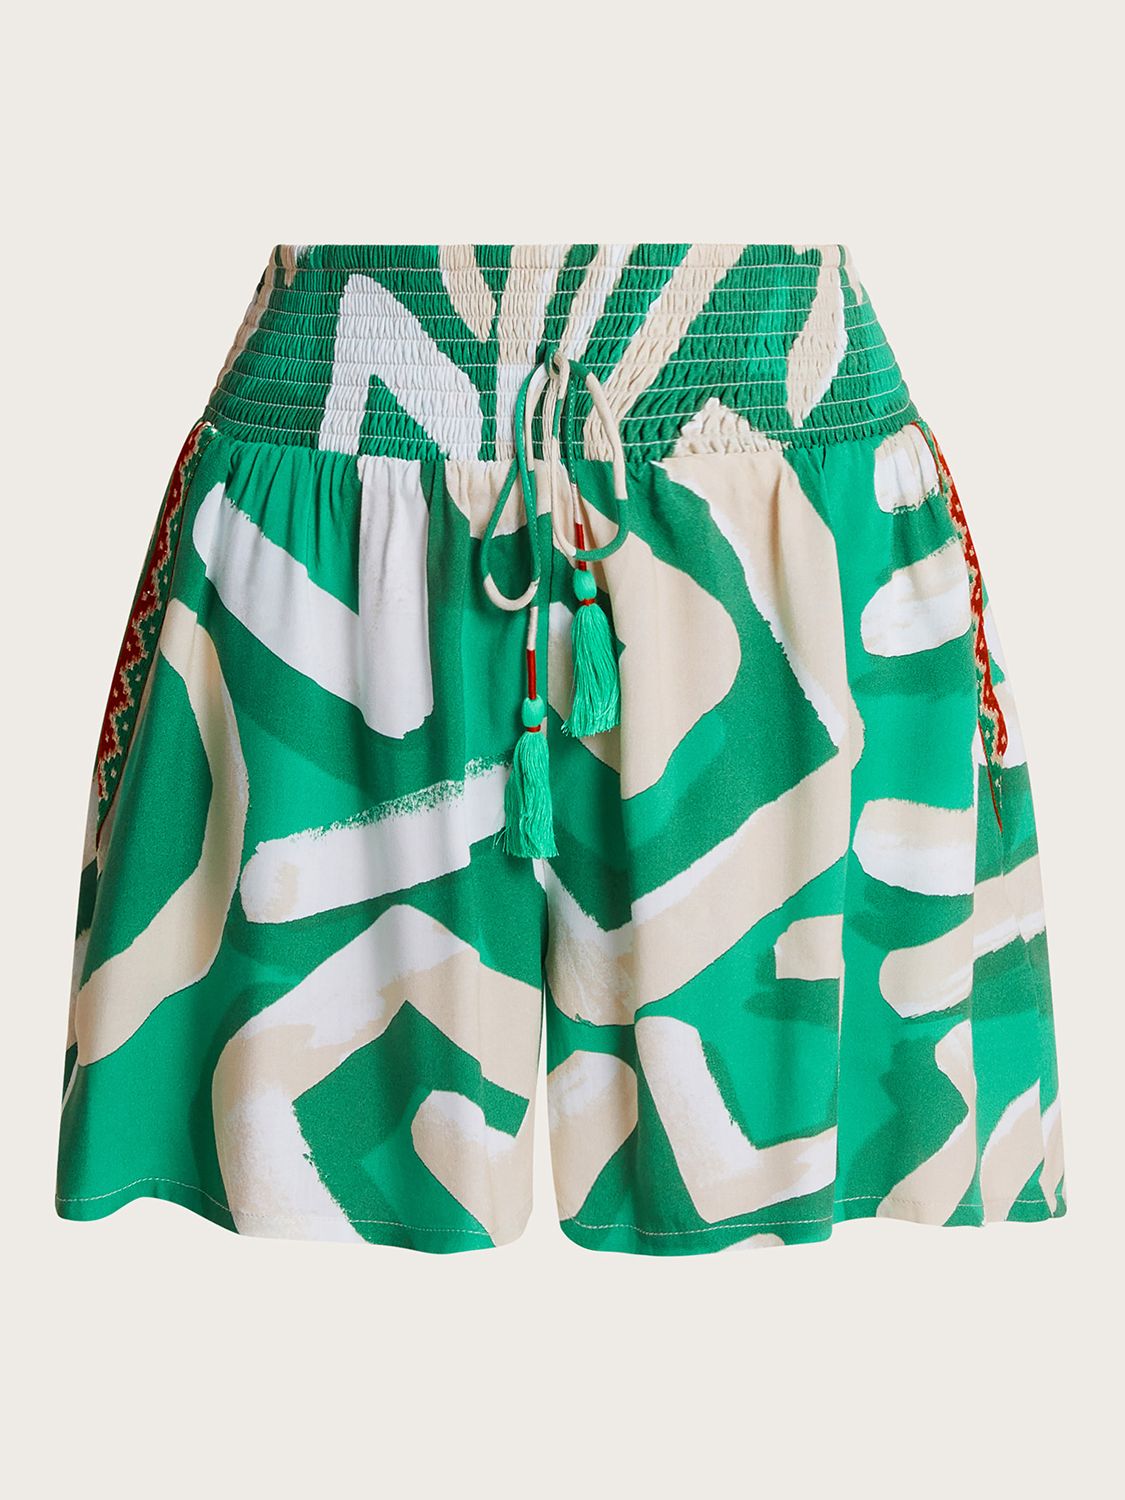 Monsoon Posy Beach Shorts, Green/Multi, S